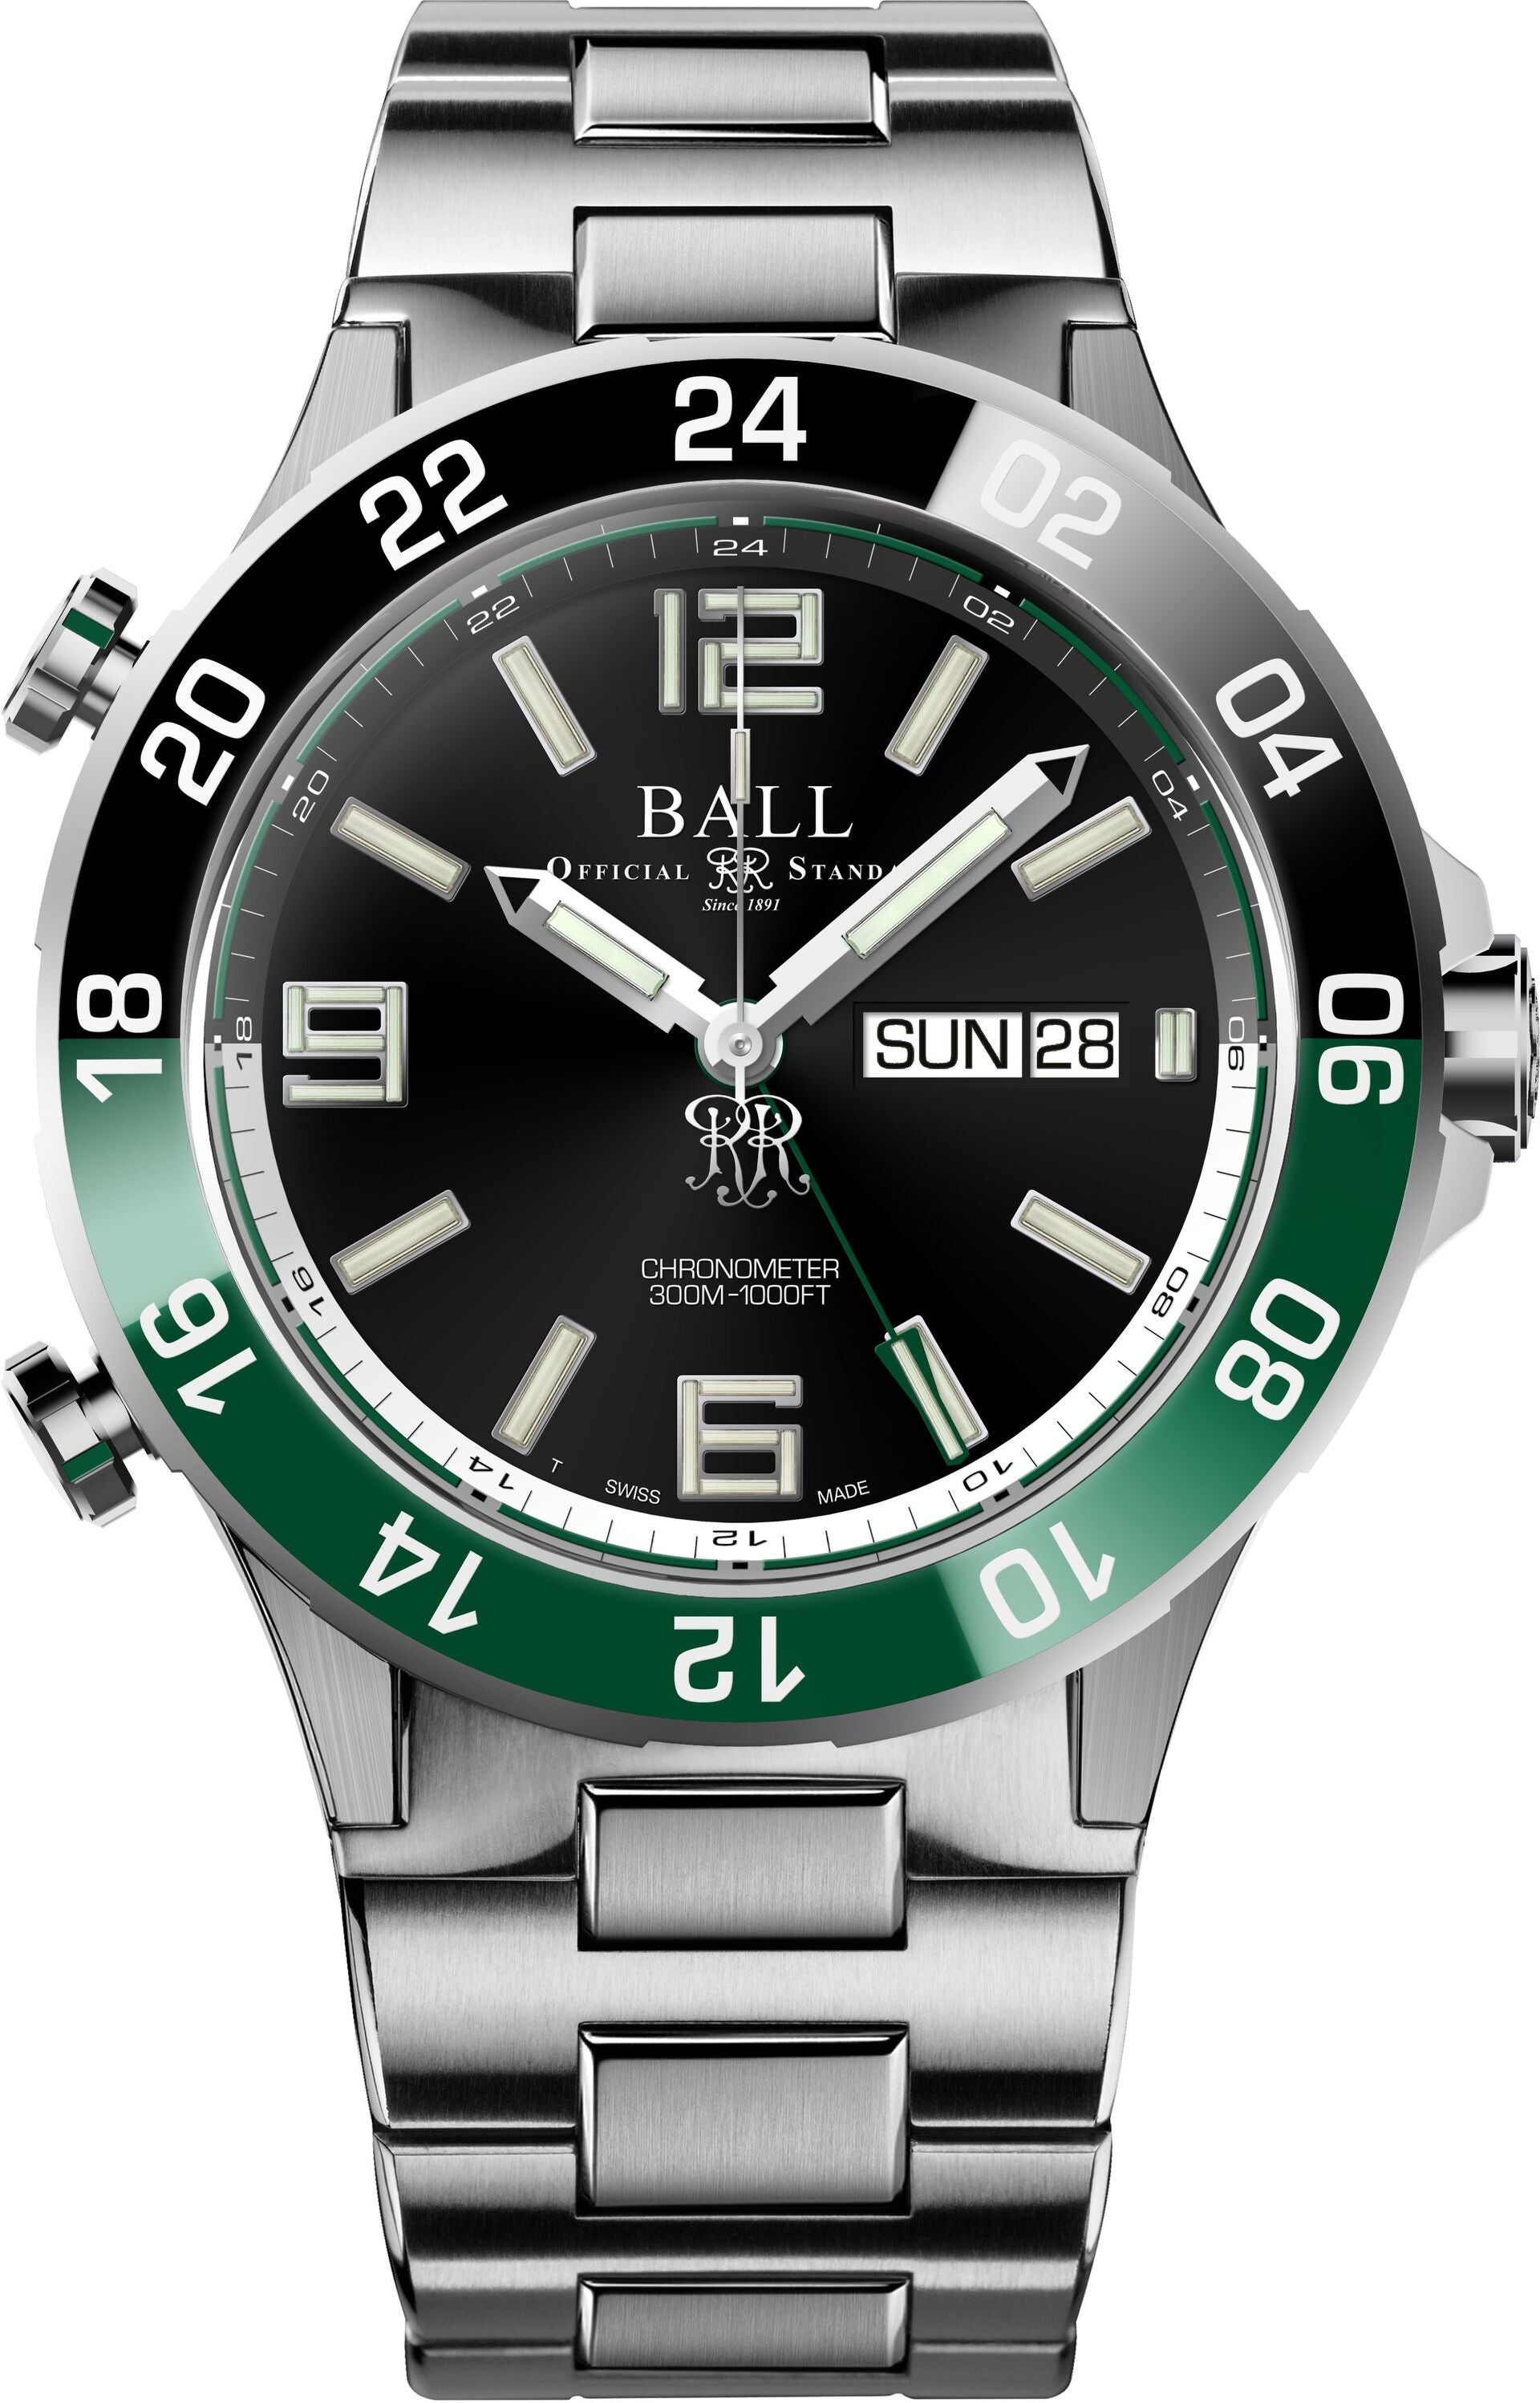 Photos - Wrist Watch Ball Watch Company Roadmaster Marine GMT Limited Edition DG3222A-S2C-BK Pr 